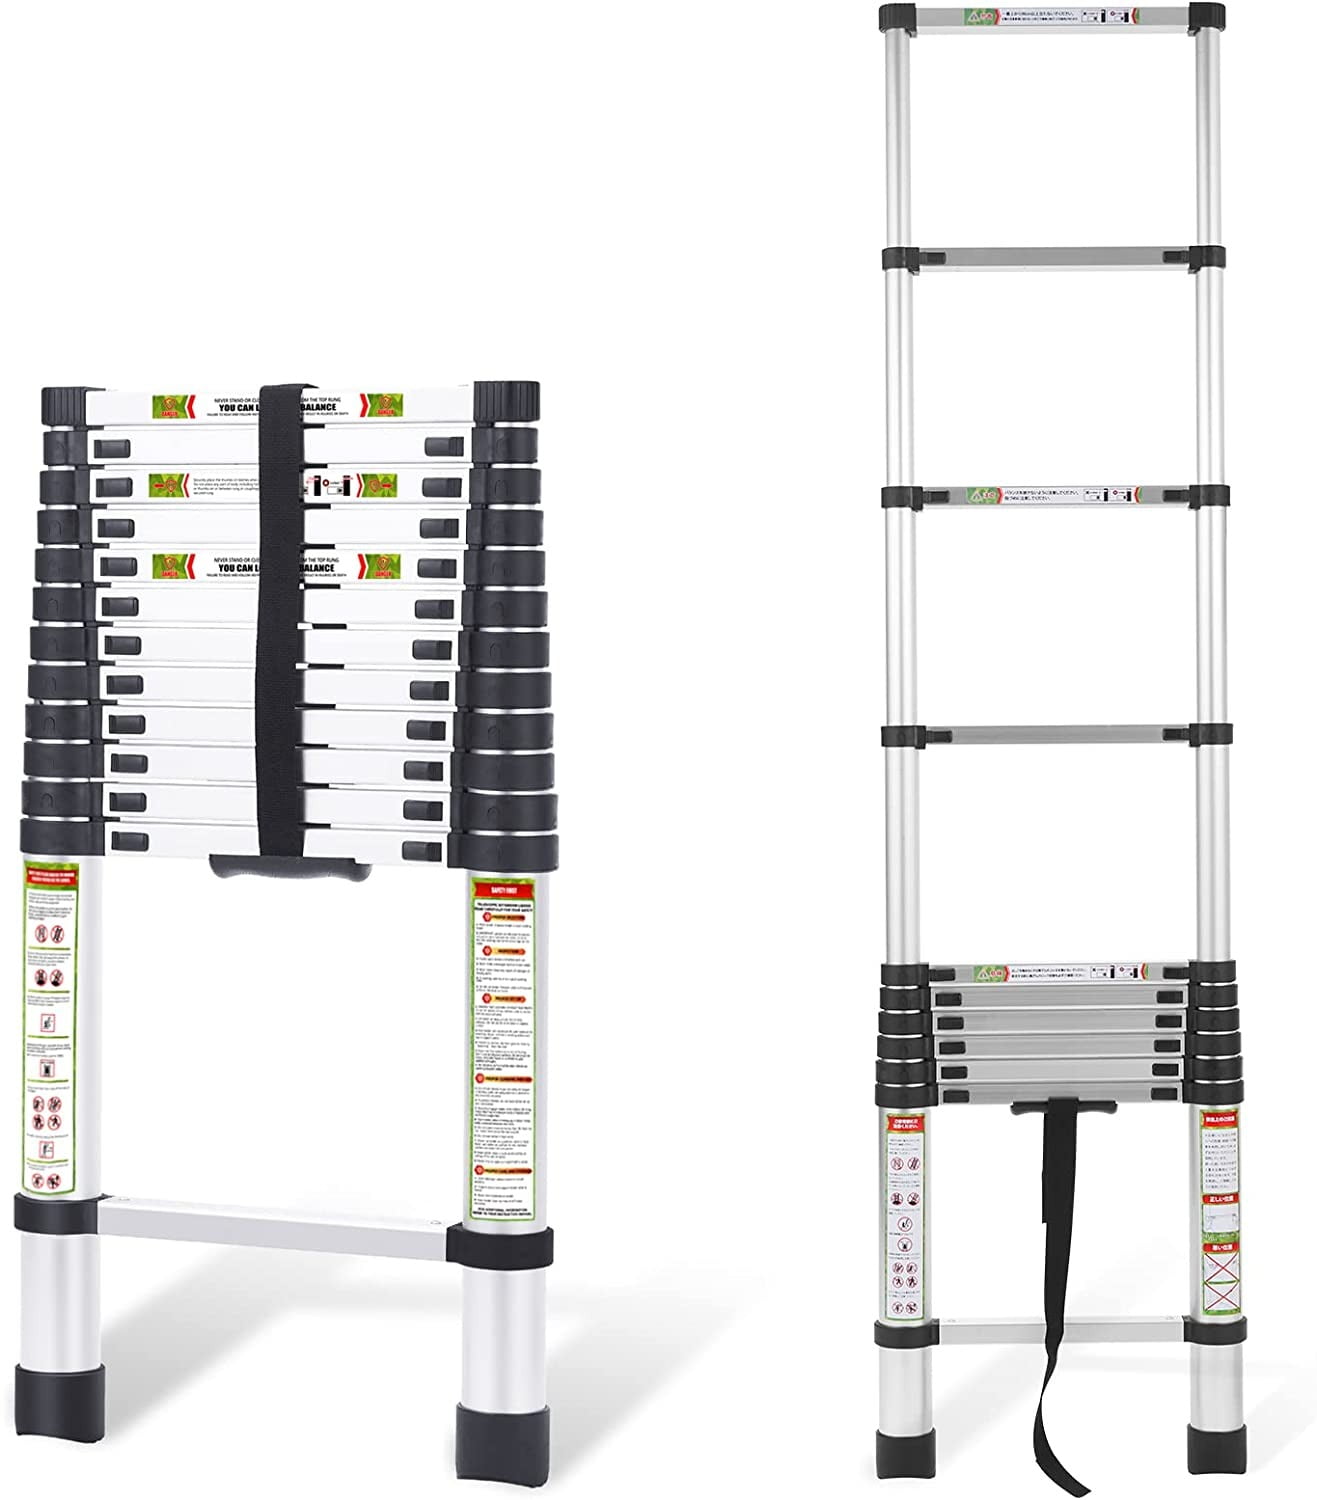 16.5 ft Telescopic aluminum ladder, finger protected